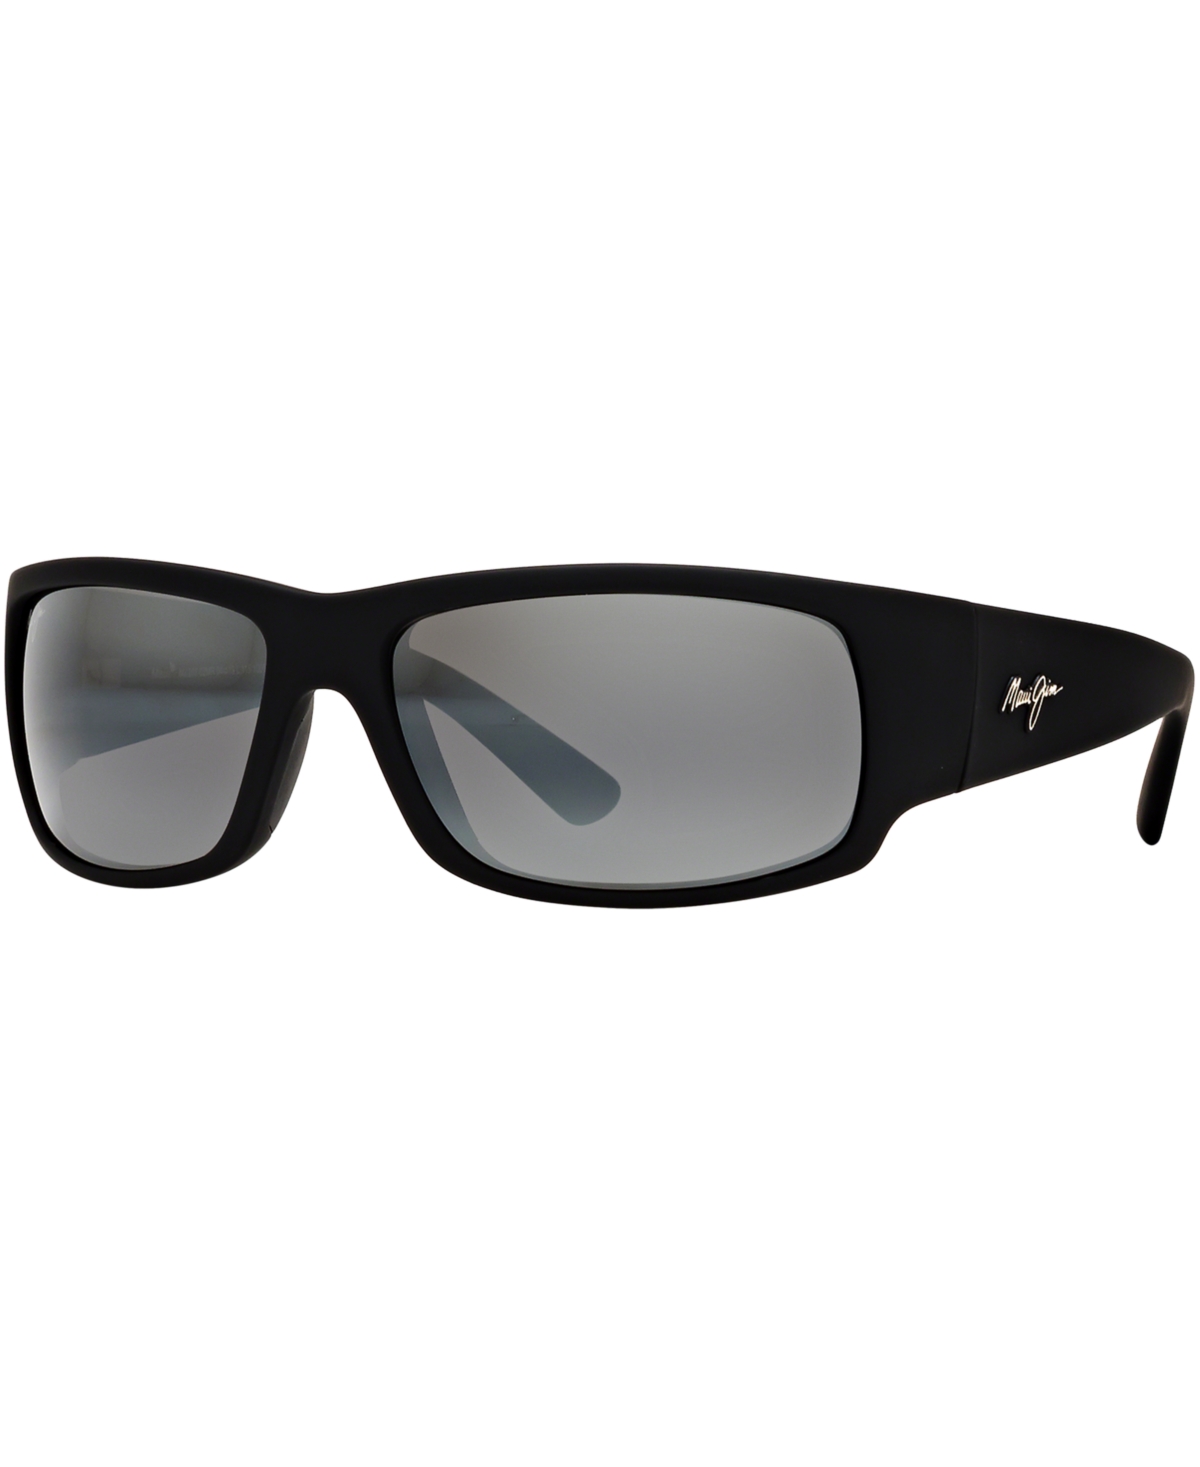 World Cup Polarized Sunglasses , 266-02MR - Black/Grey